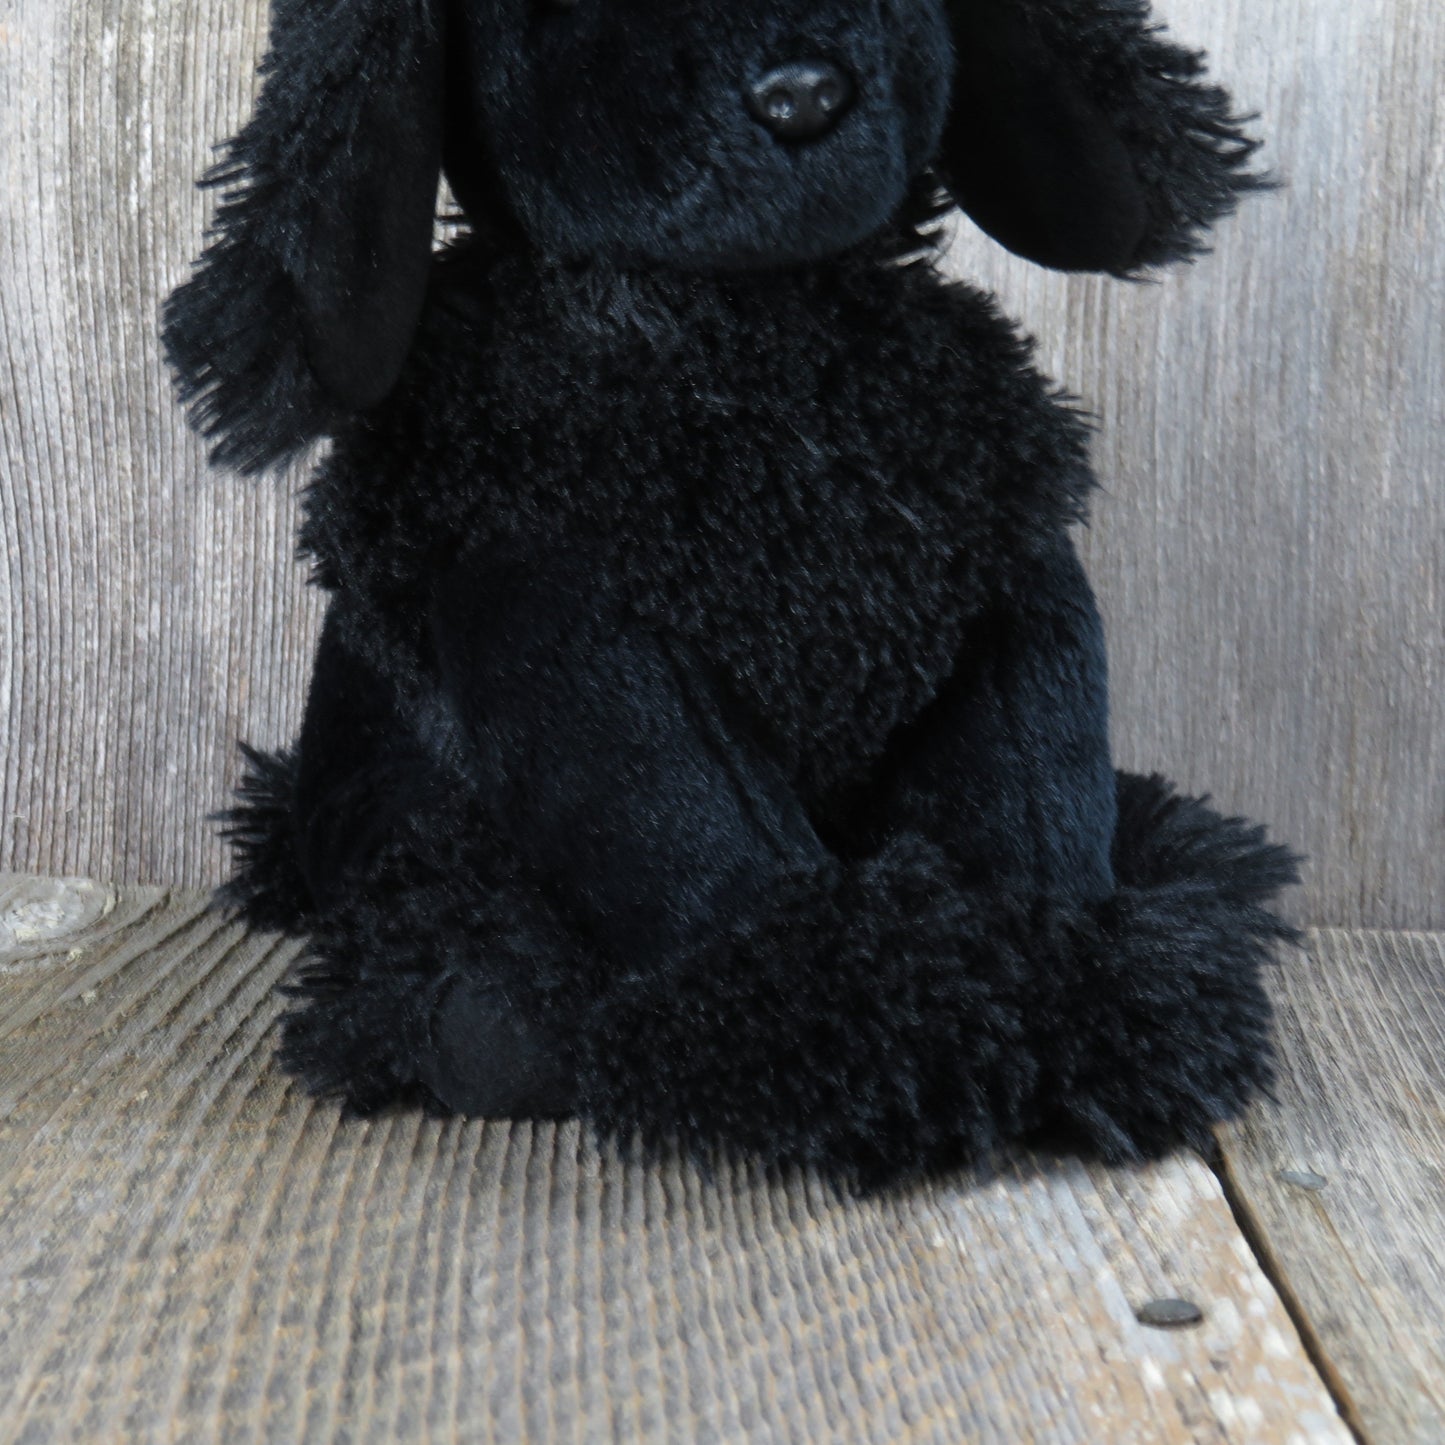 Poodle Dog Gigi Plush Ty Beanie Buddies Buddy Puppy Black Stuffed Animal Doll